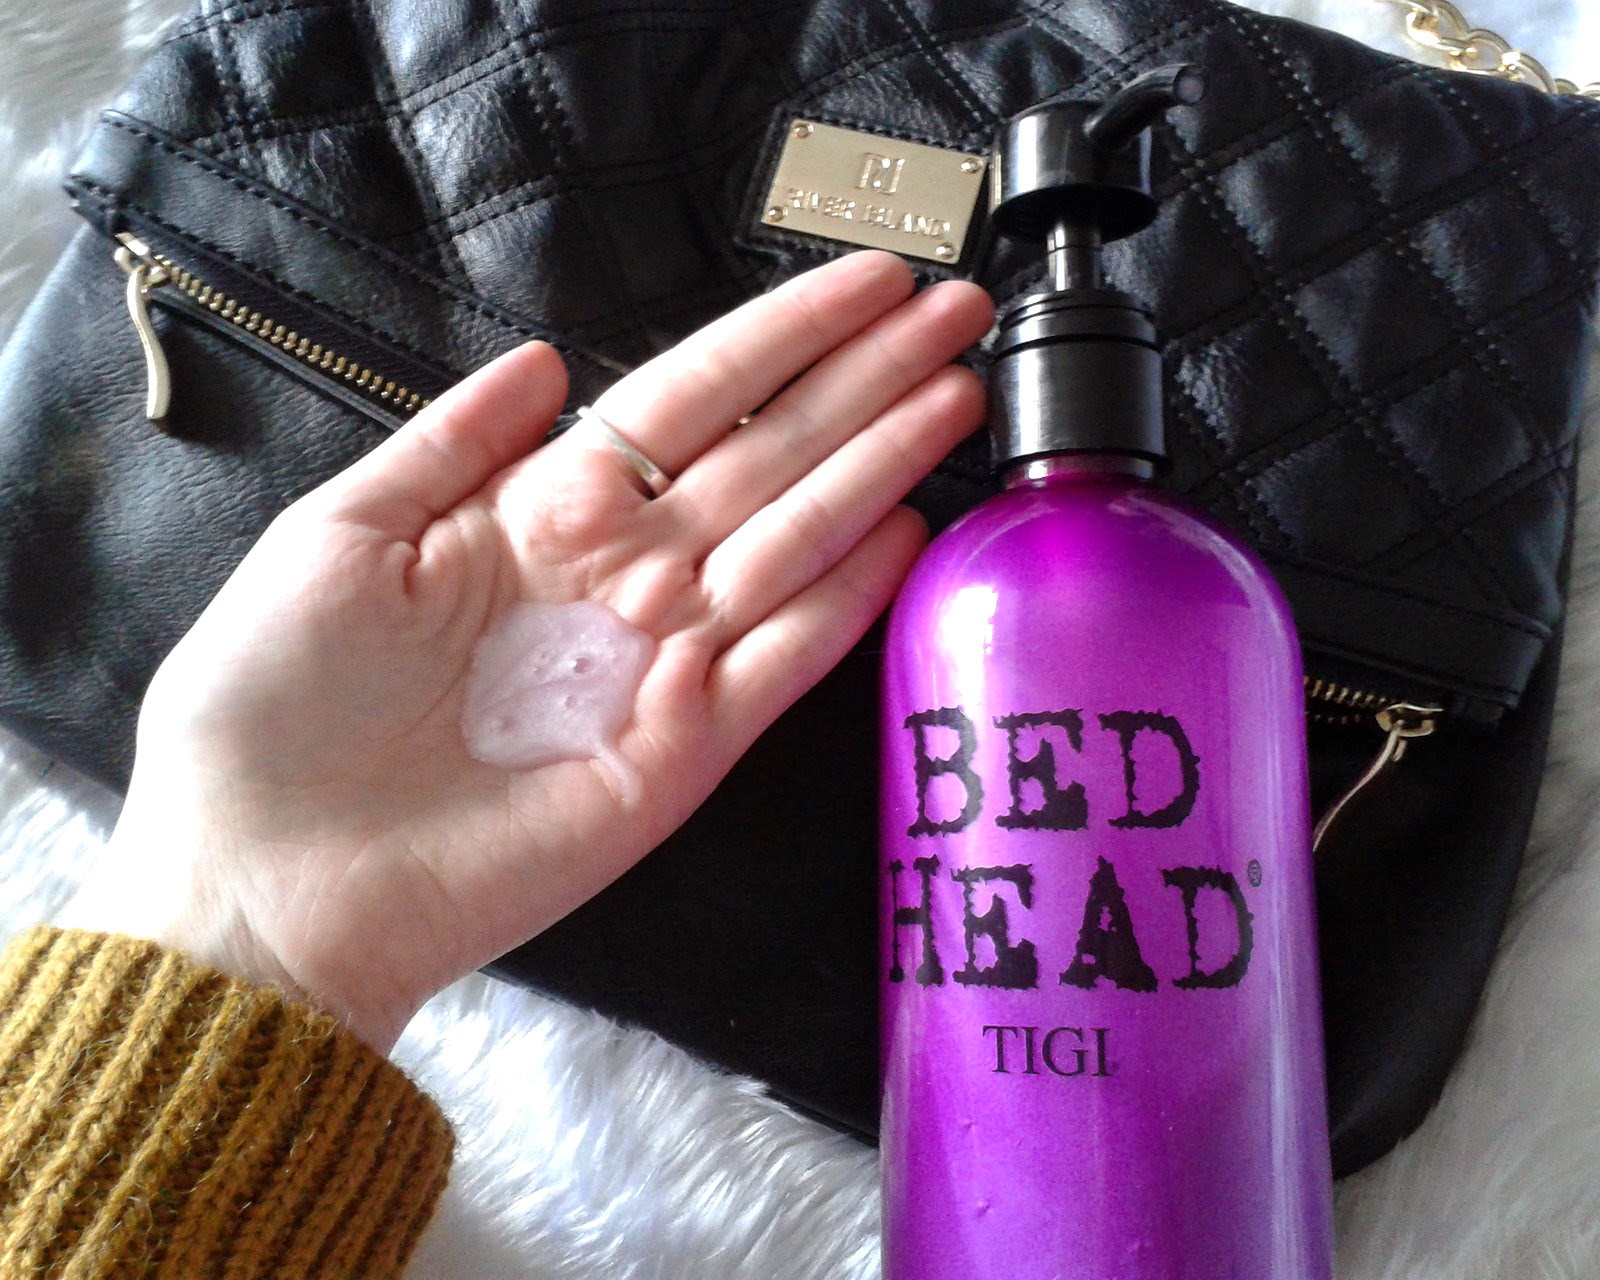 8. TIGI Bed Head Dumb Blonde Purple Toning Shampoo - wide 1